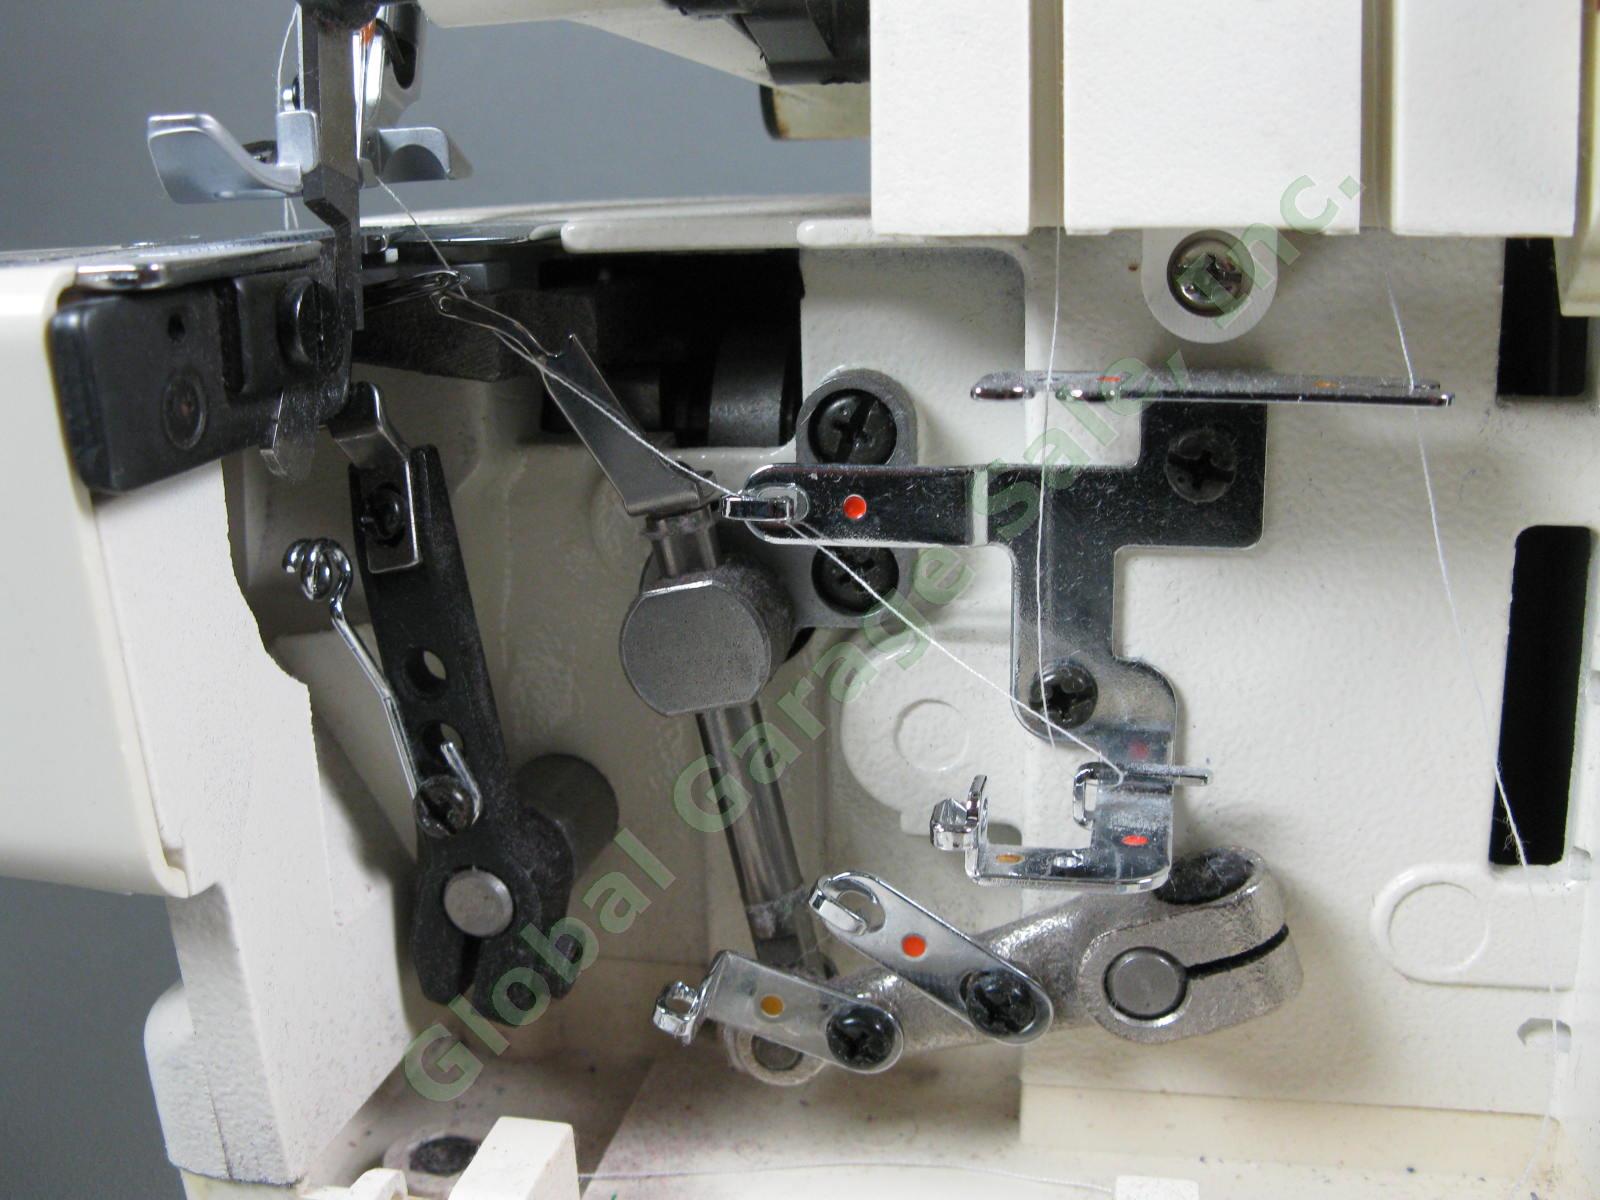 Singer Ultralock 14U32A Serger Sewing Machine Tested Runs Great Pedal Power Cord 4